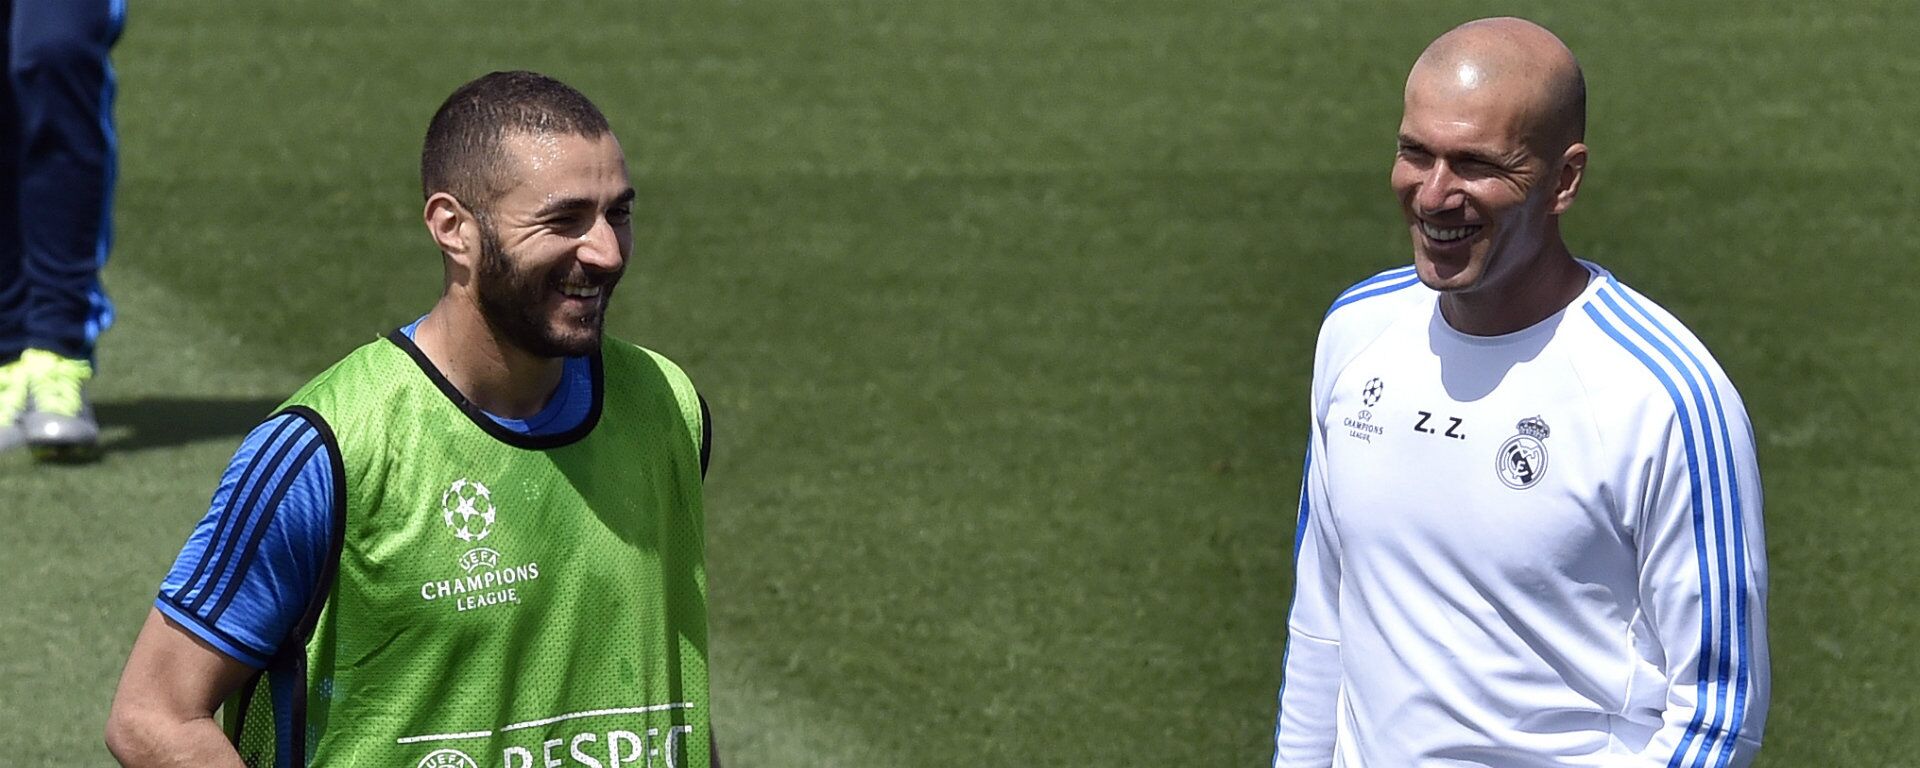 کریم بنزما مهاجم رئال مادرید  Kerim Benzema ve Zinedine Zidane - اسپوتنیک افغانستان  , 1920, 22.02.2021